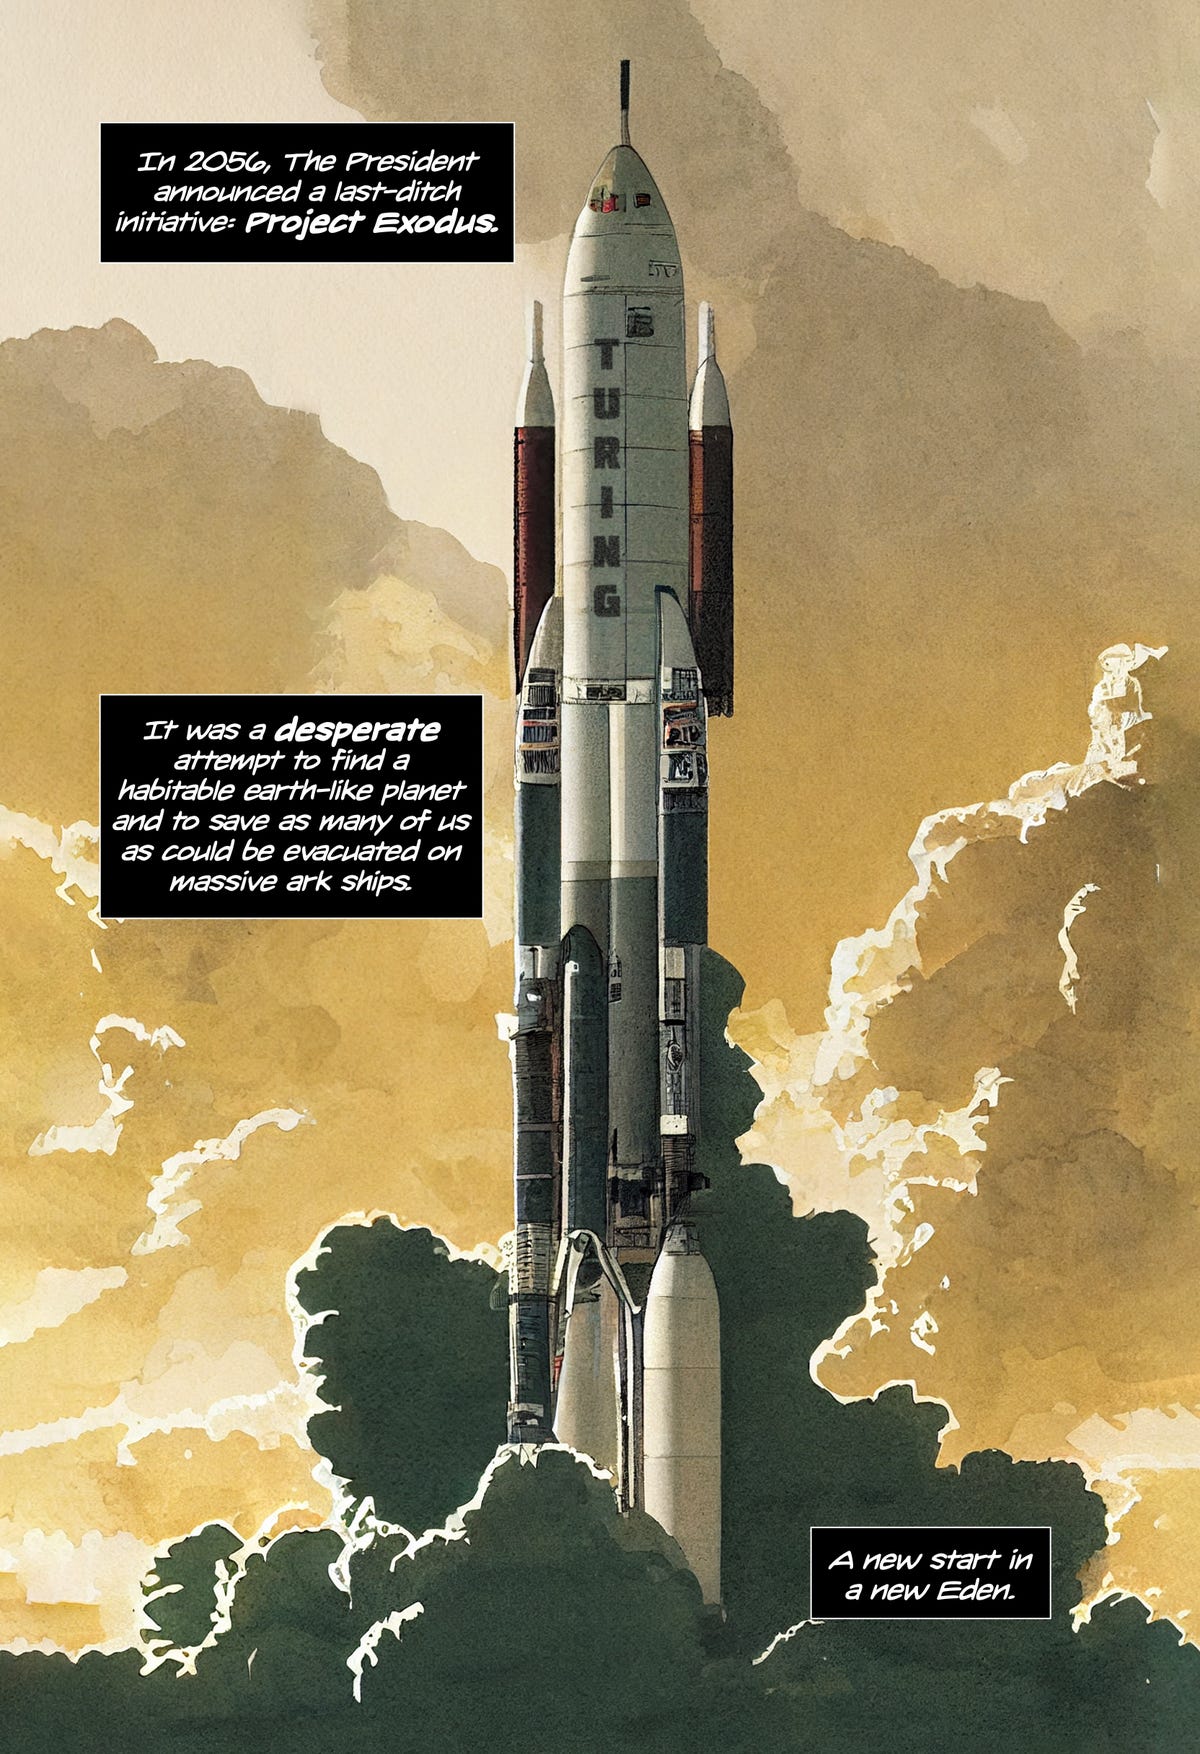 Halaman dari The Exodus, menunjukkan roket mengarah ke atas